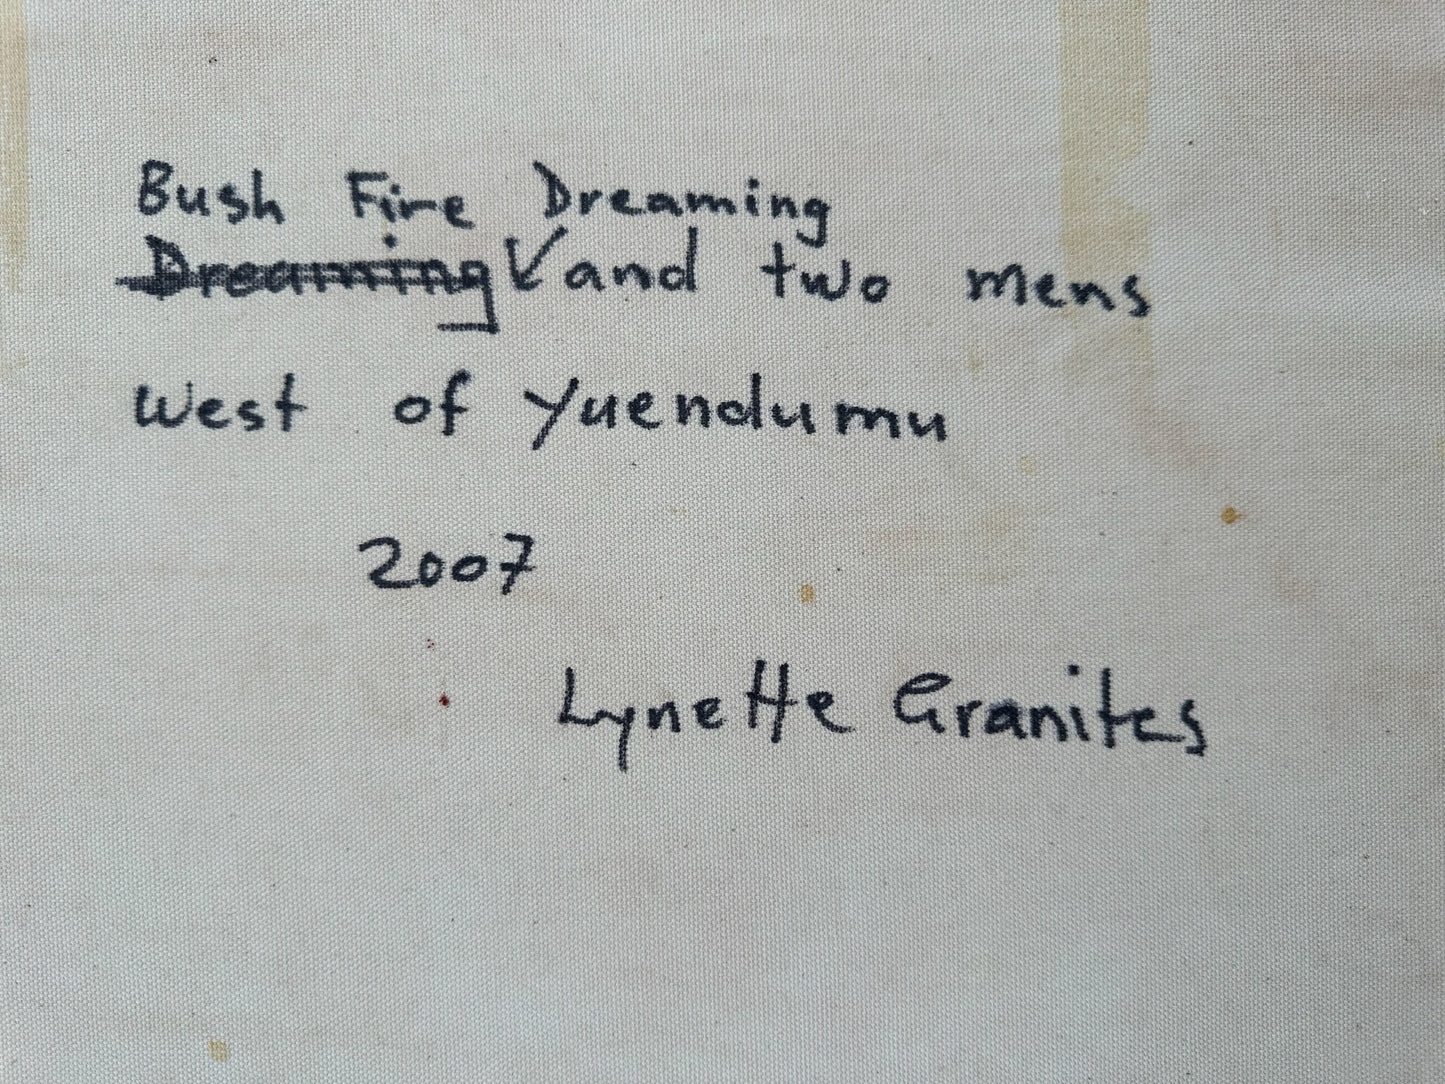 LYNETTE GRANITES NAMPIJINPA - Bush Fire Dreaming & Two Men West of Yuendumu